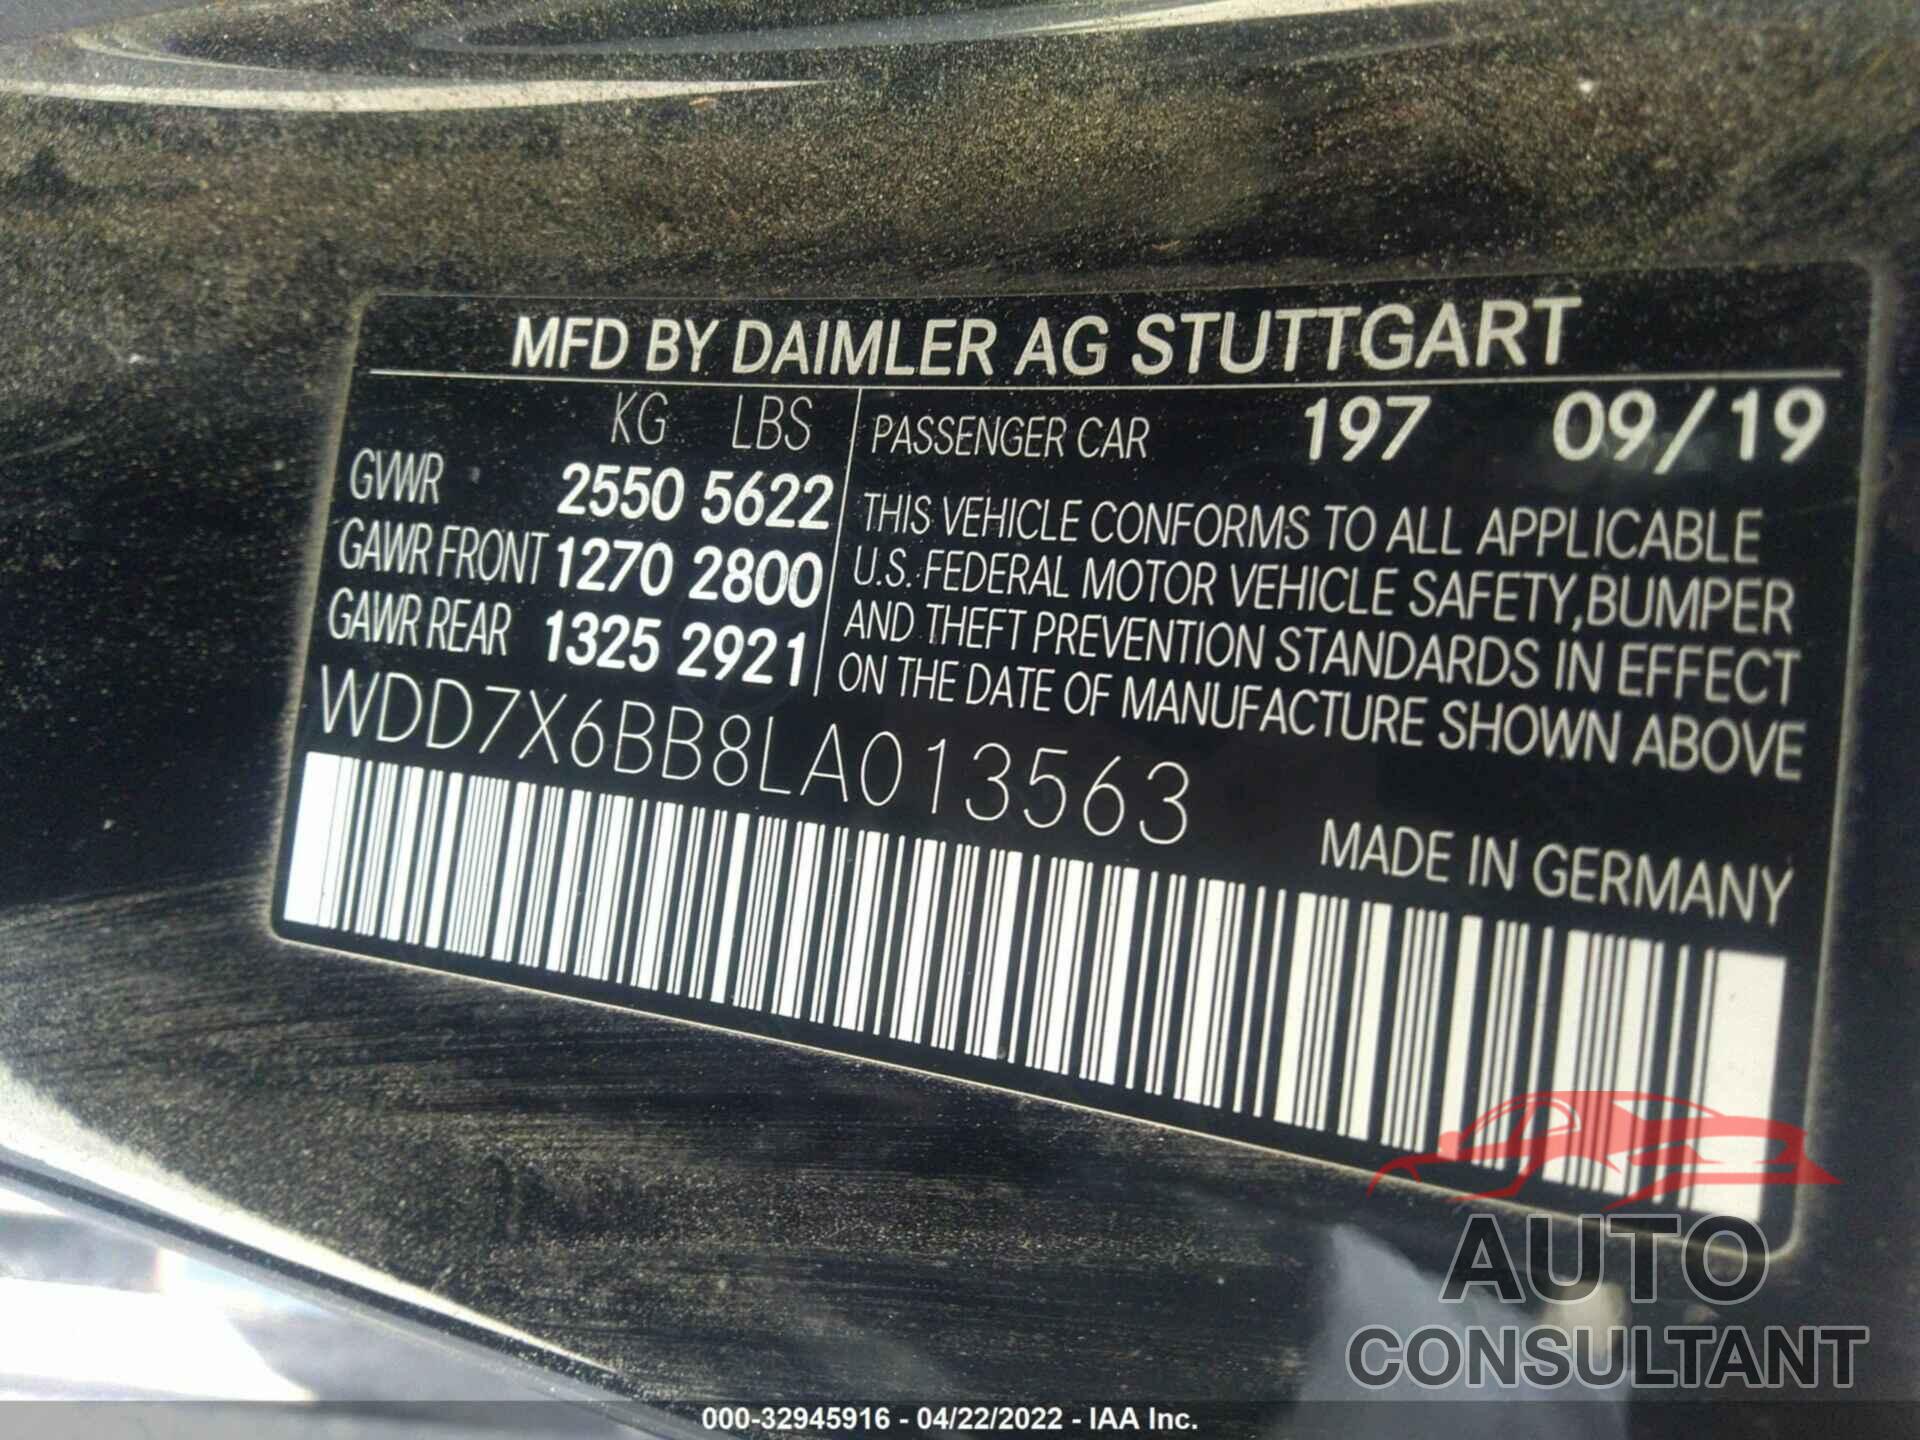 MERCEDES-BENZ AMG GT 2020 - WDD7X6BB8LA013563